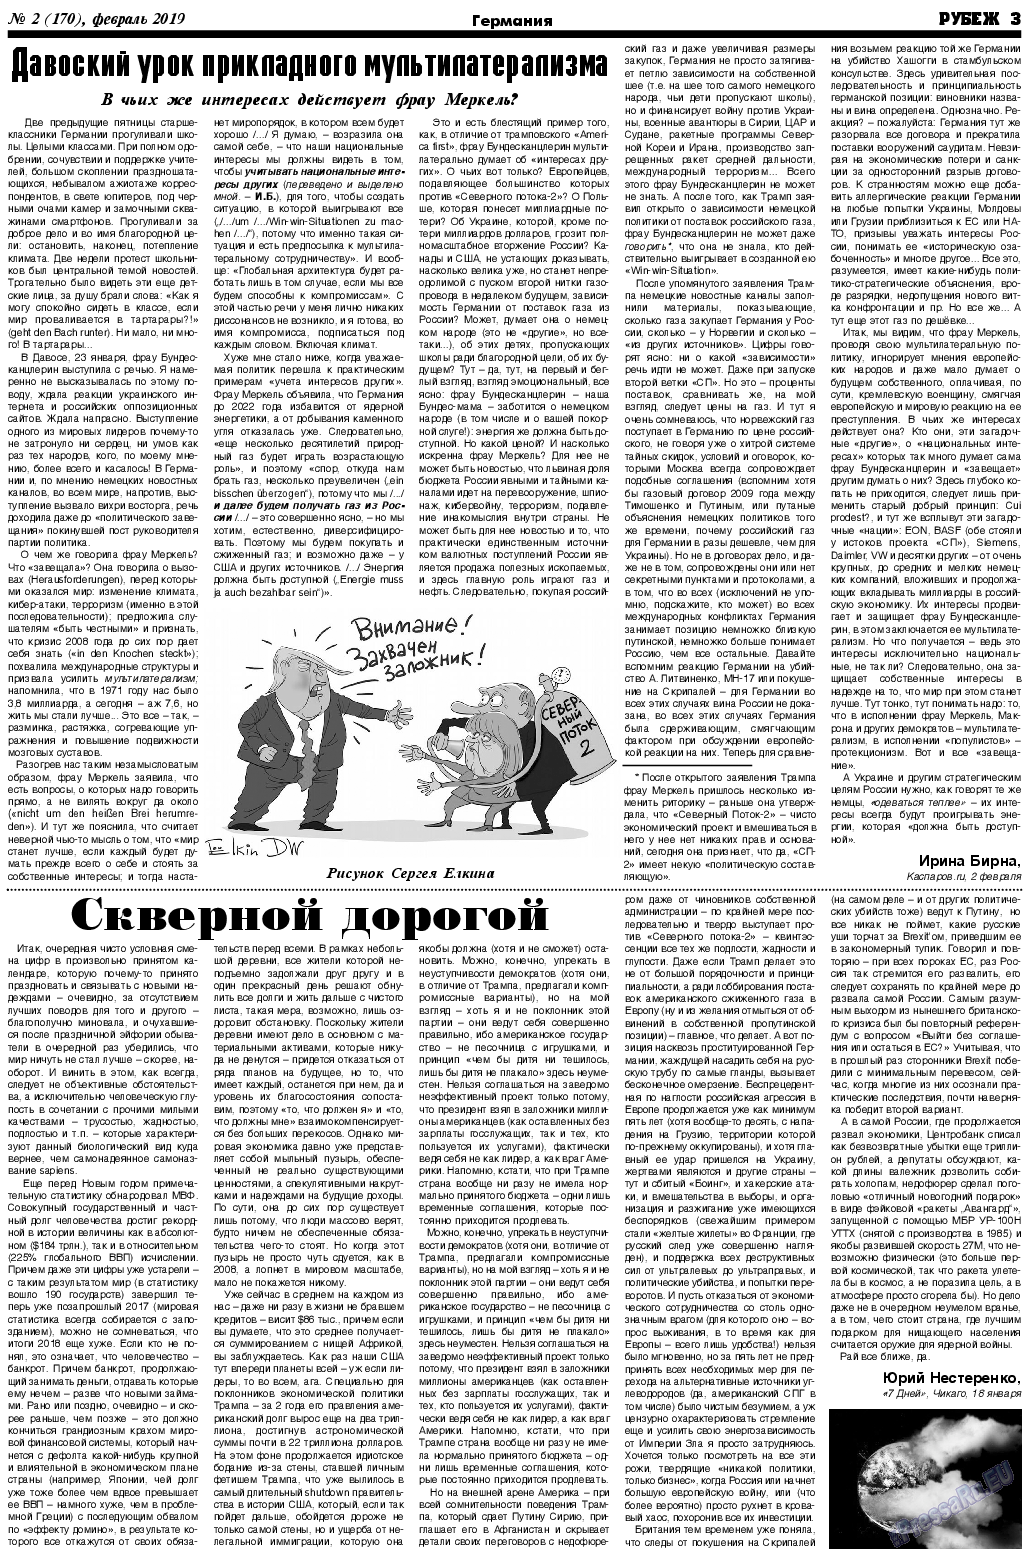 Рубеж, газета. 2019 №2 стр.3